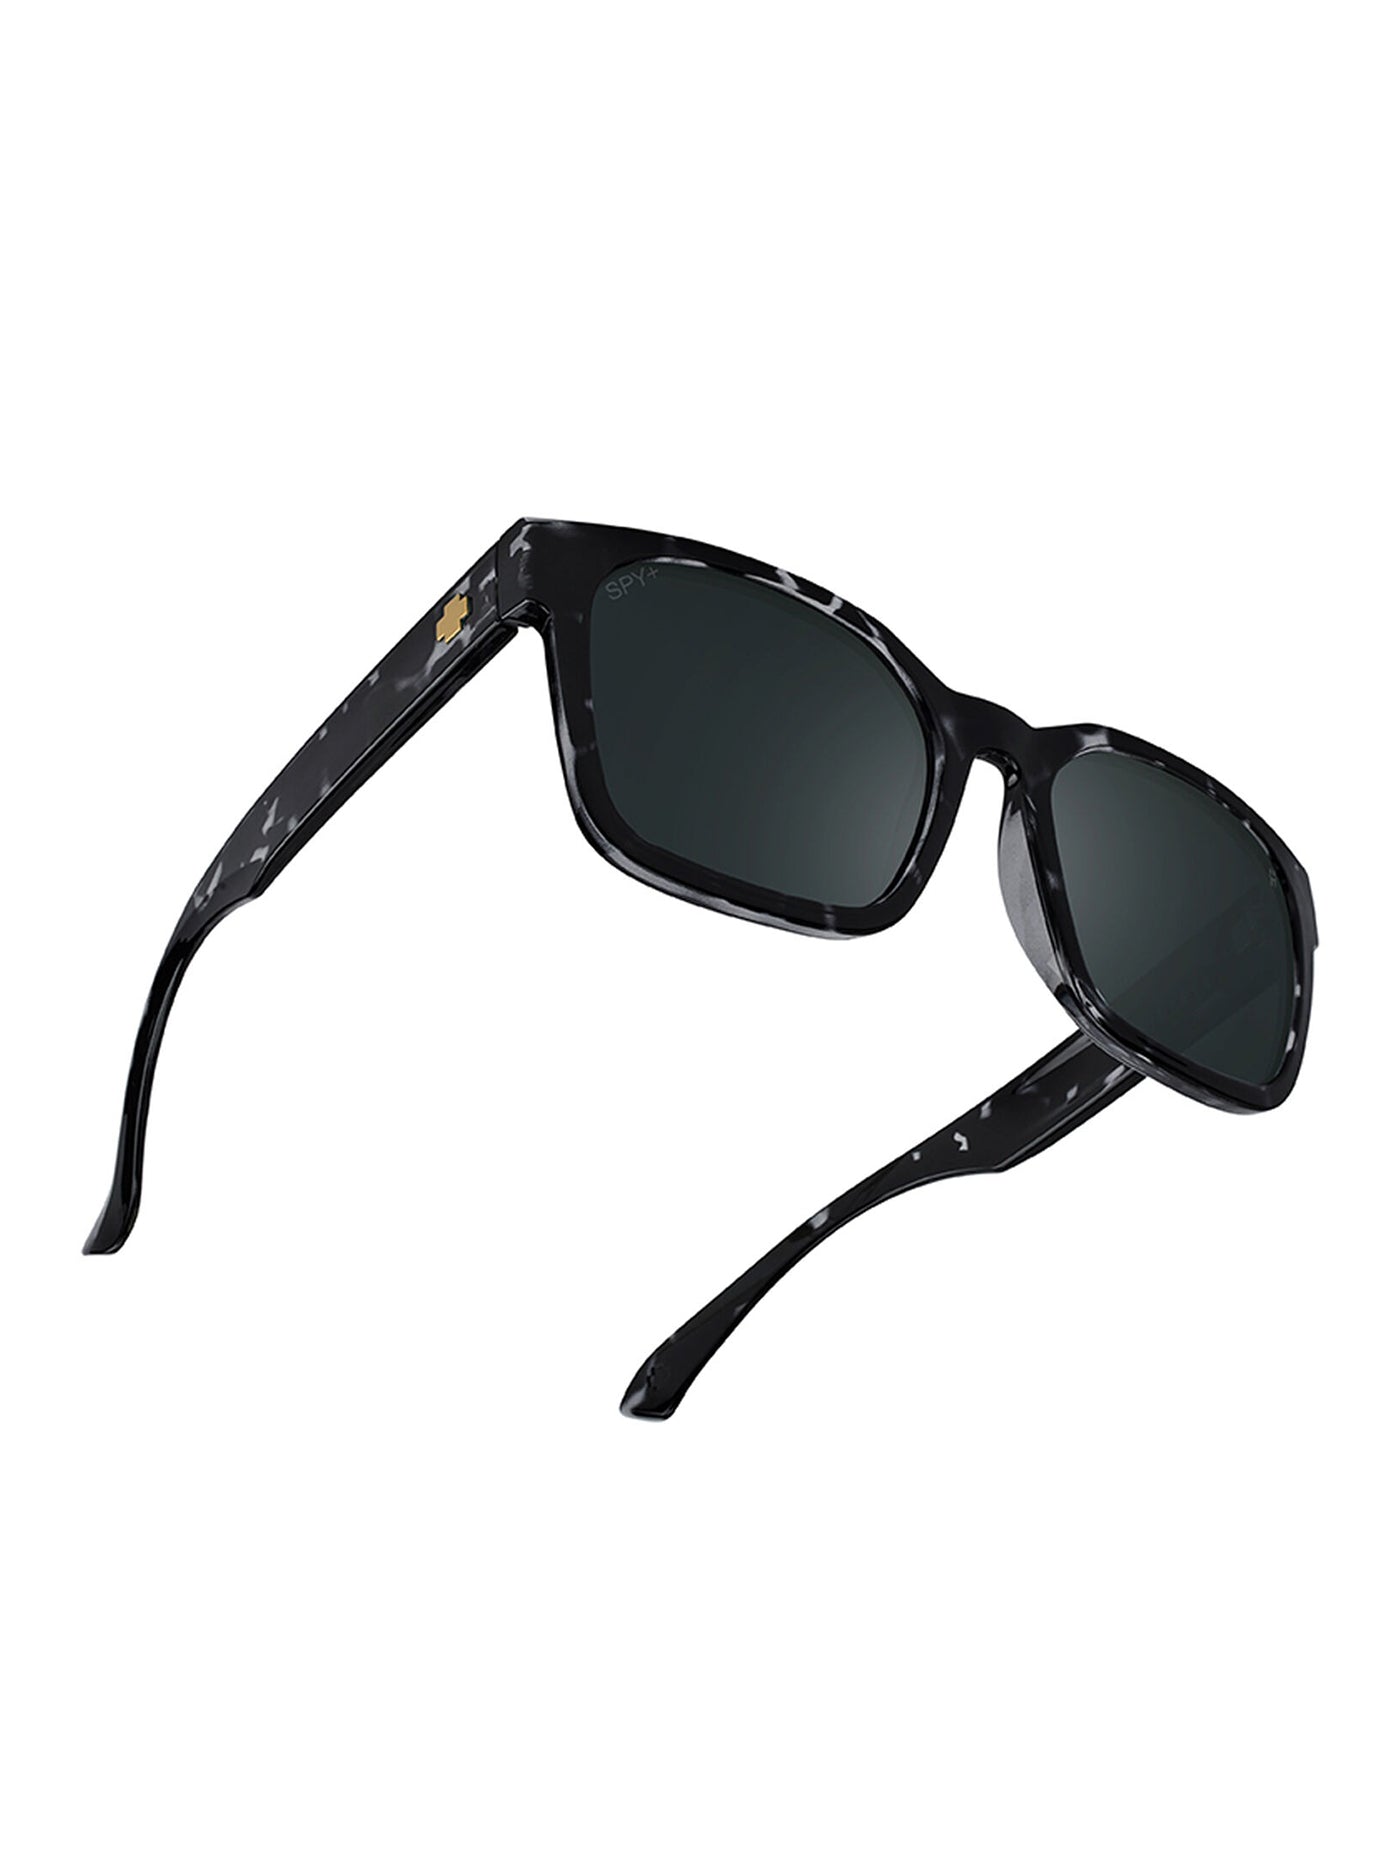 Spy Dessa Black Marble Tort/Gray Green Black Sunglasses